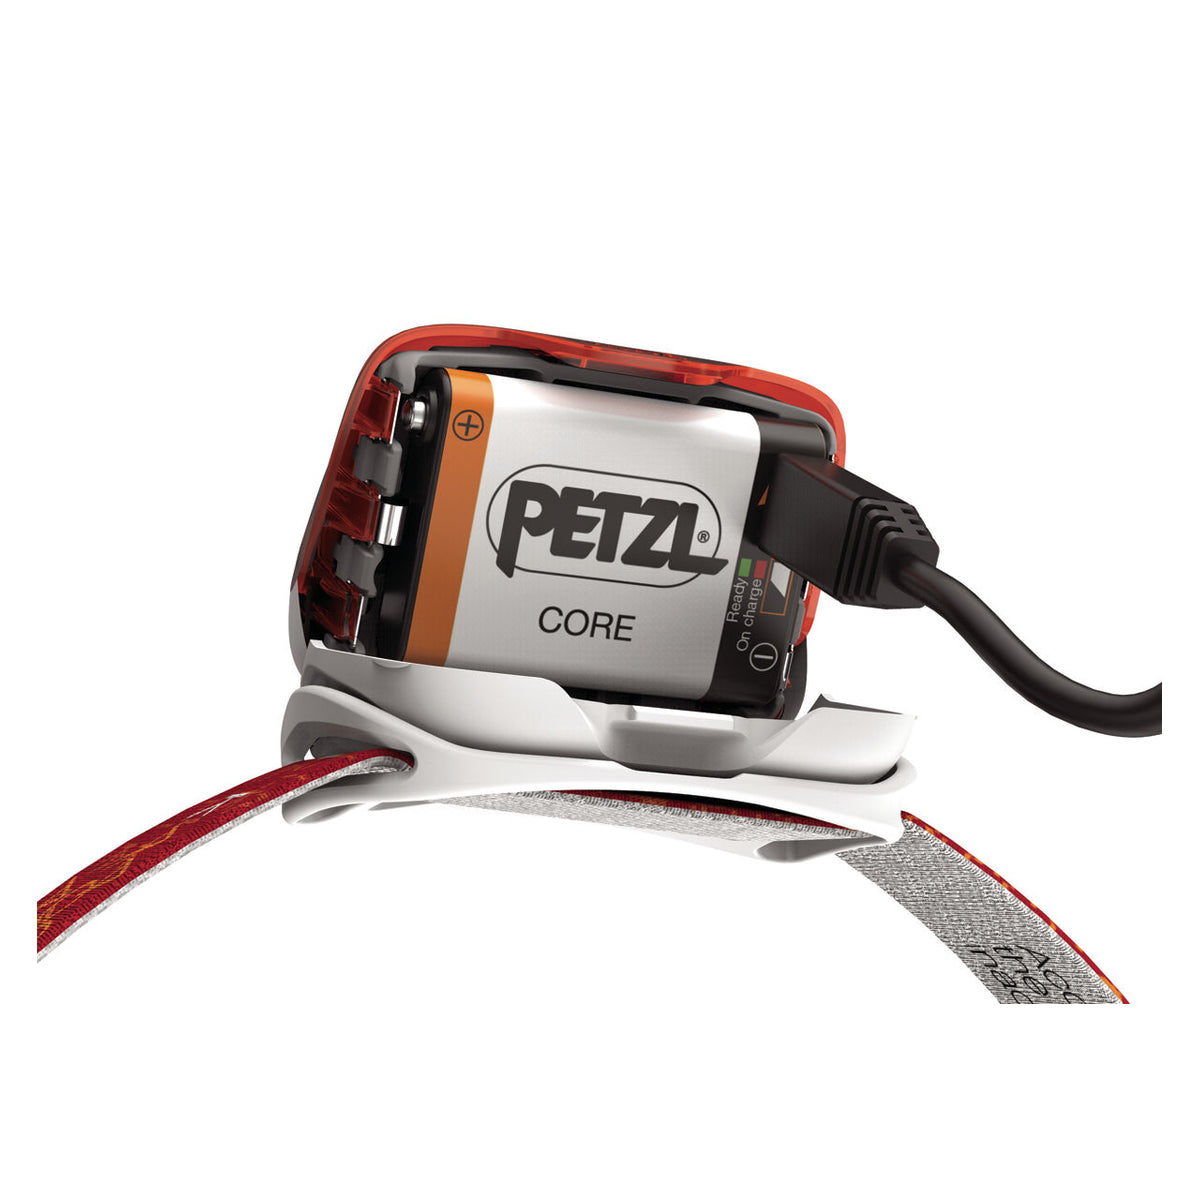 Petzl Actik Core Headlamp (2021 Model) in Petzl Actik Core Headlamp by Petzl America | Gear - goHUNT Shop by GOHUNT | Petzl America - GOHUNT Shop